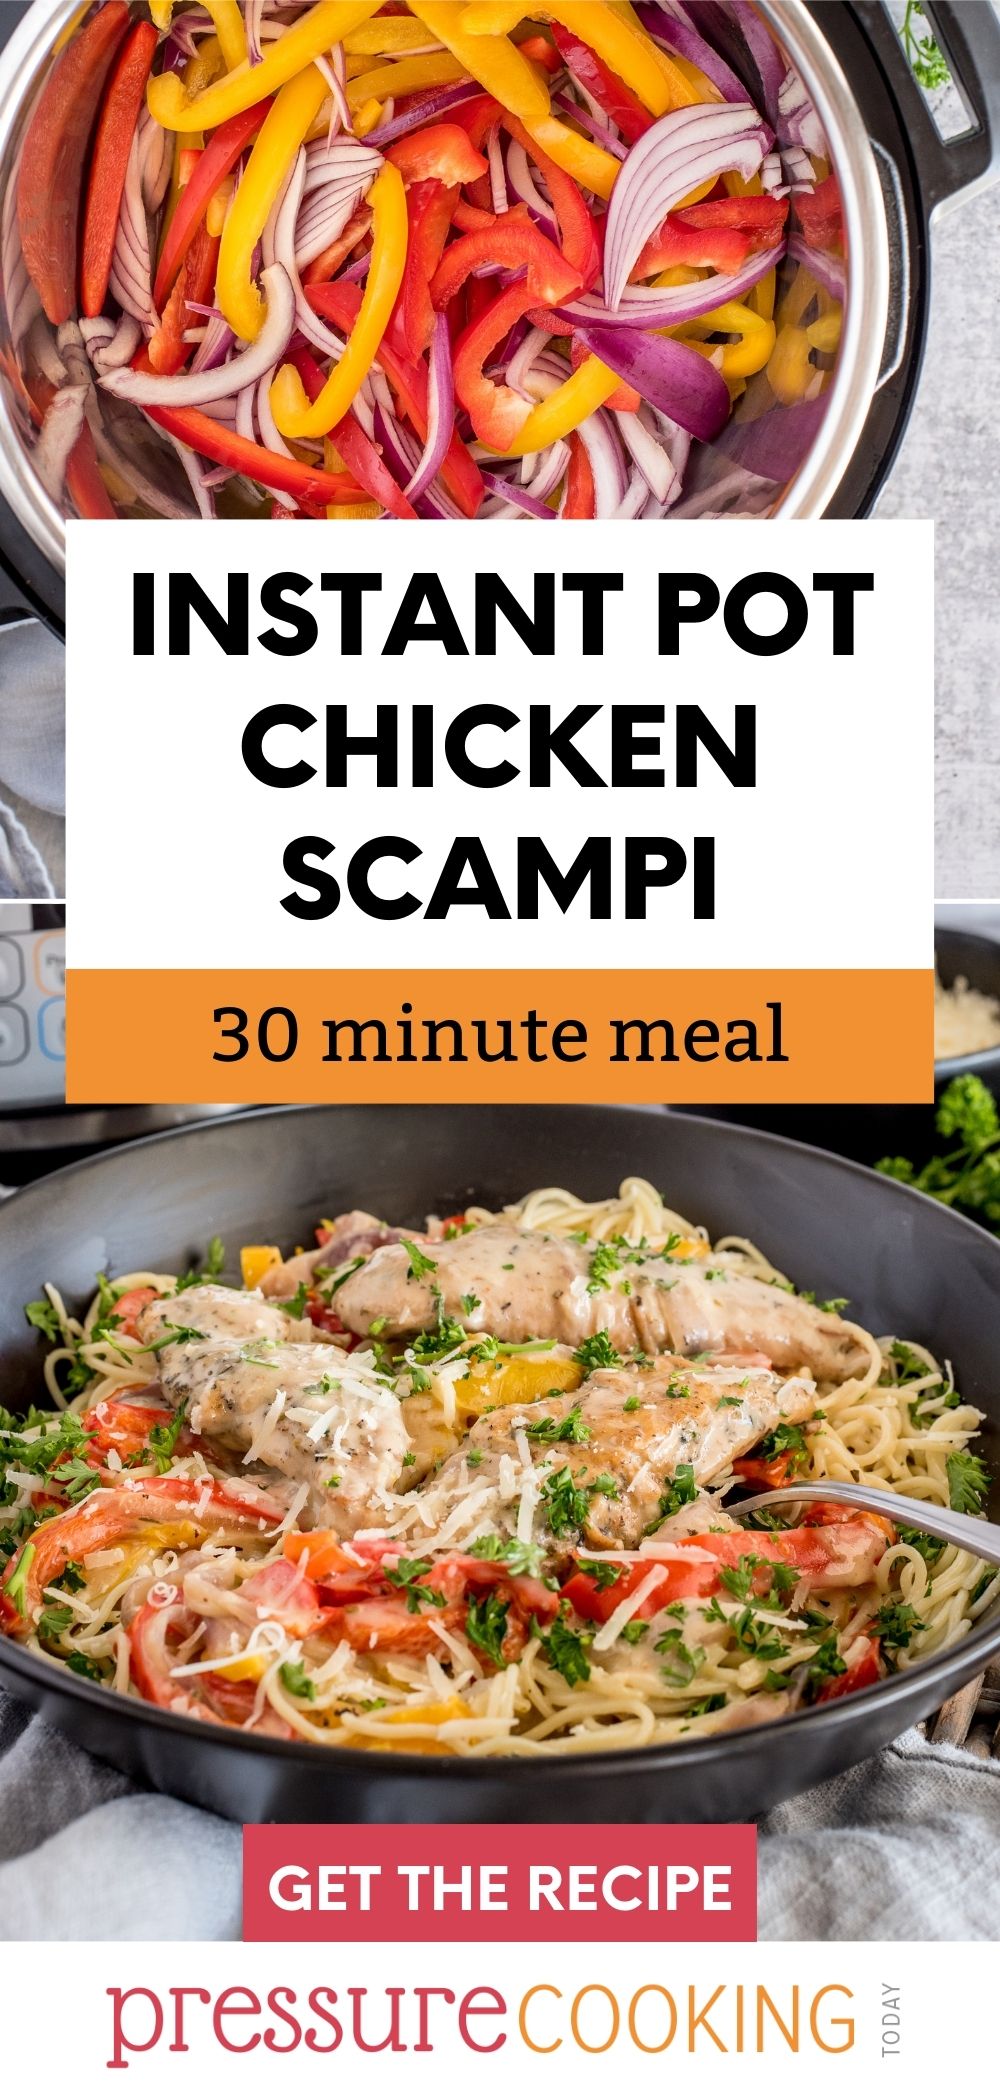 pinterest image that reads "Instant Pot Chicken Scampi: 30 minute meal" via @PressureCook2da